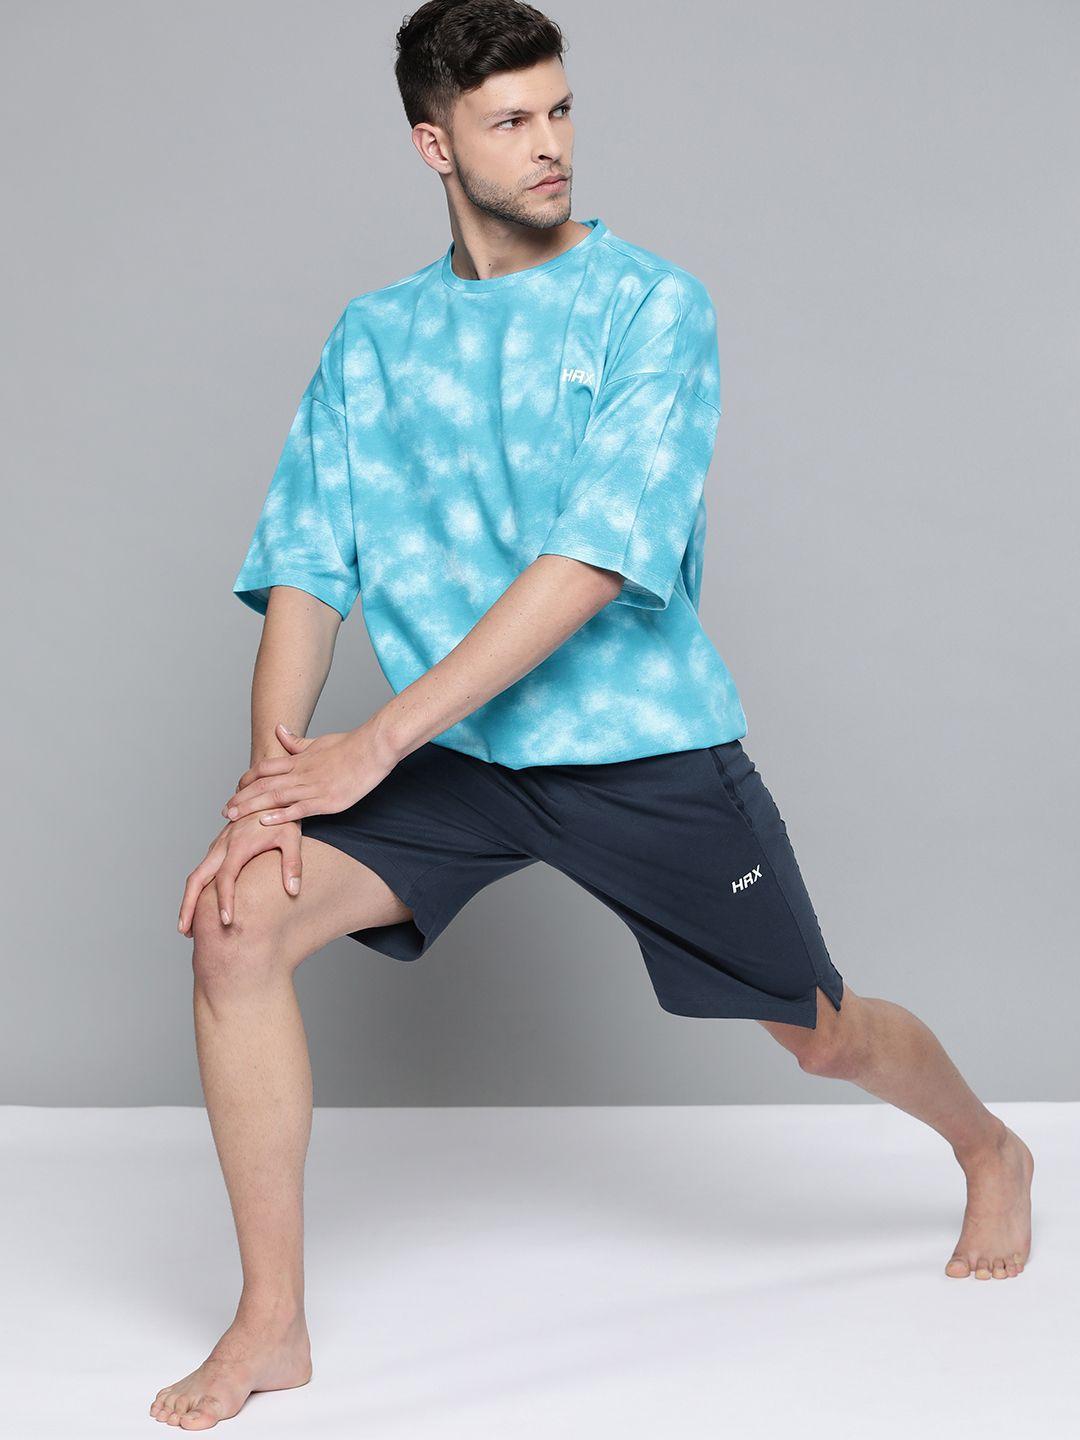 hrx by hrithik roshan men iron solid organic cotton yoga sustainable shorts